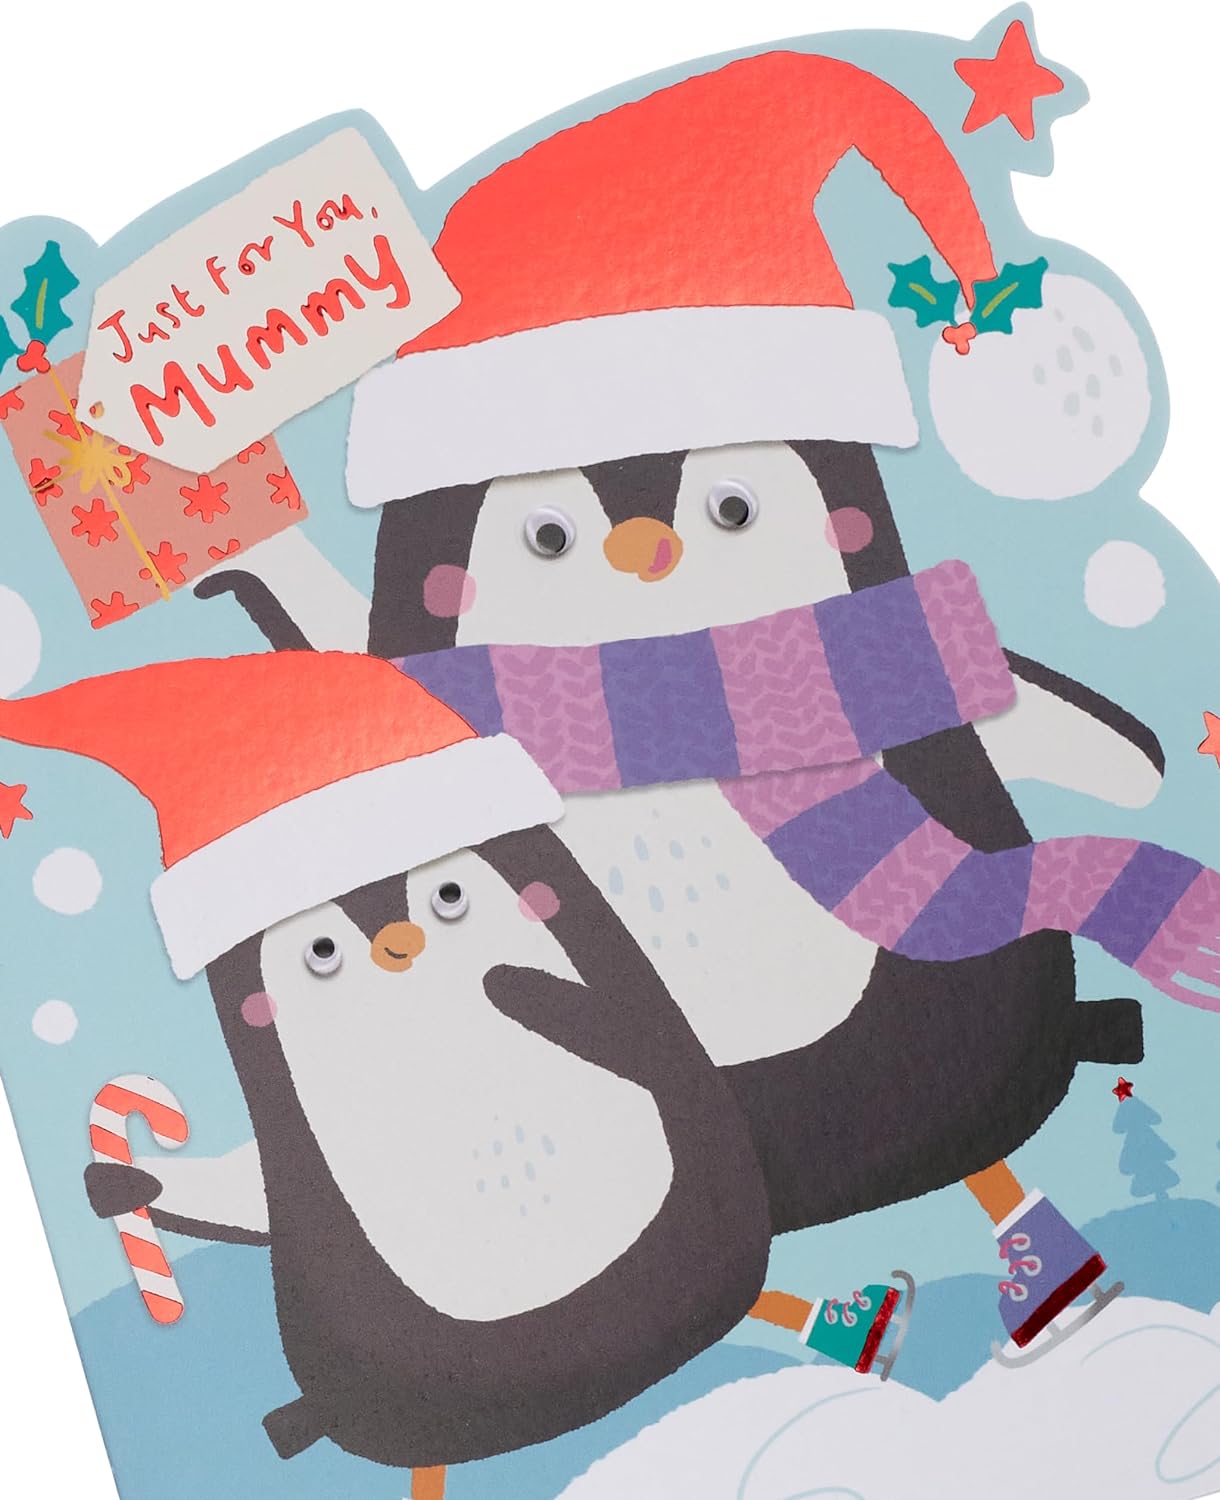 Mummy Christmas Card Cute Penguins Design 